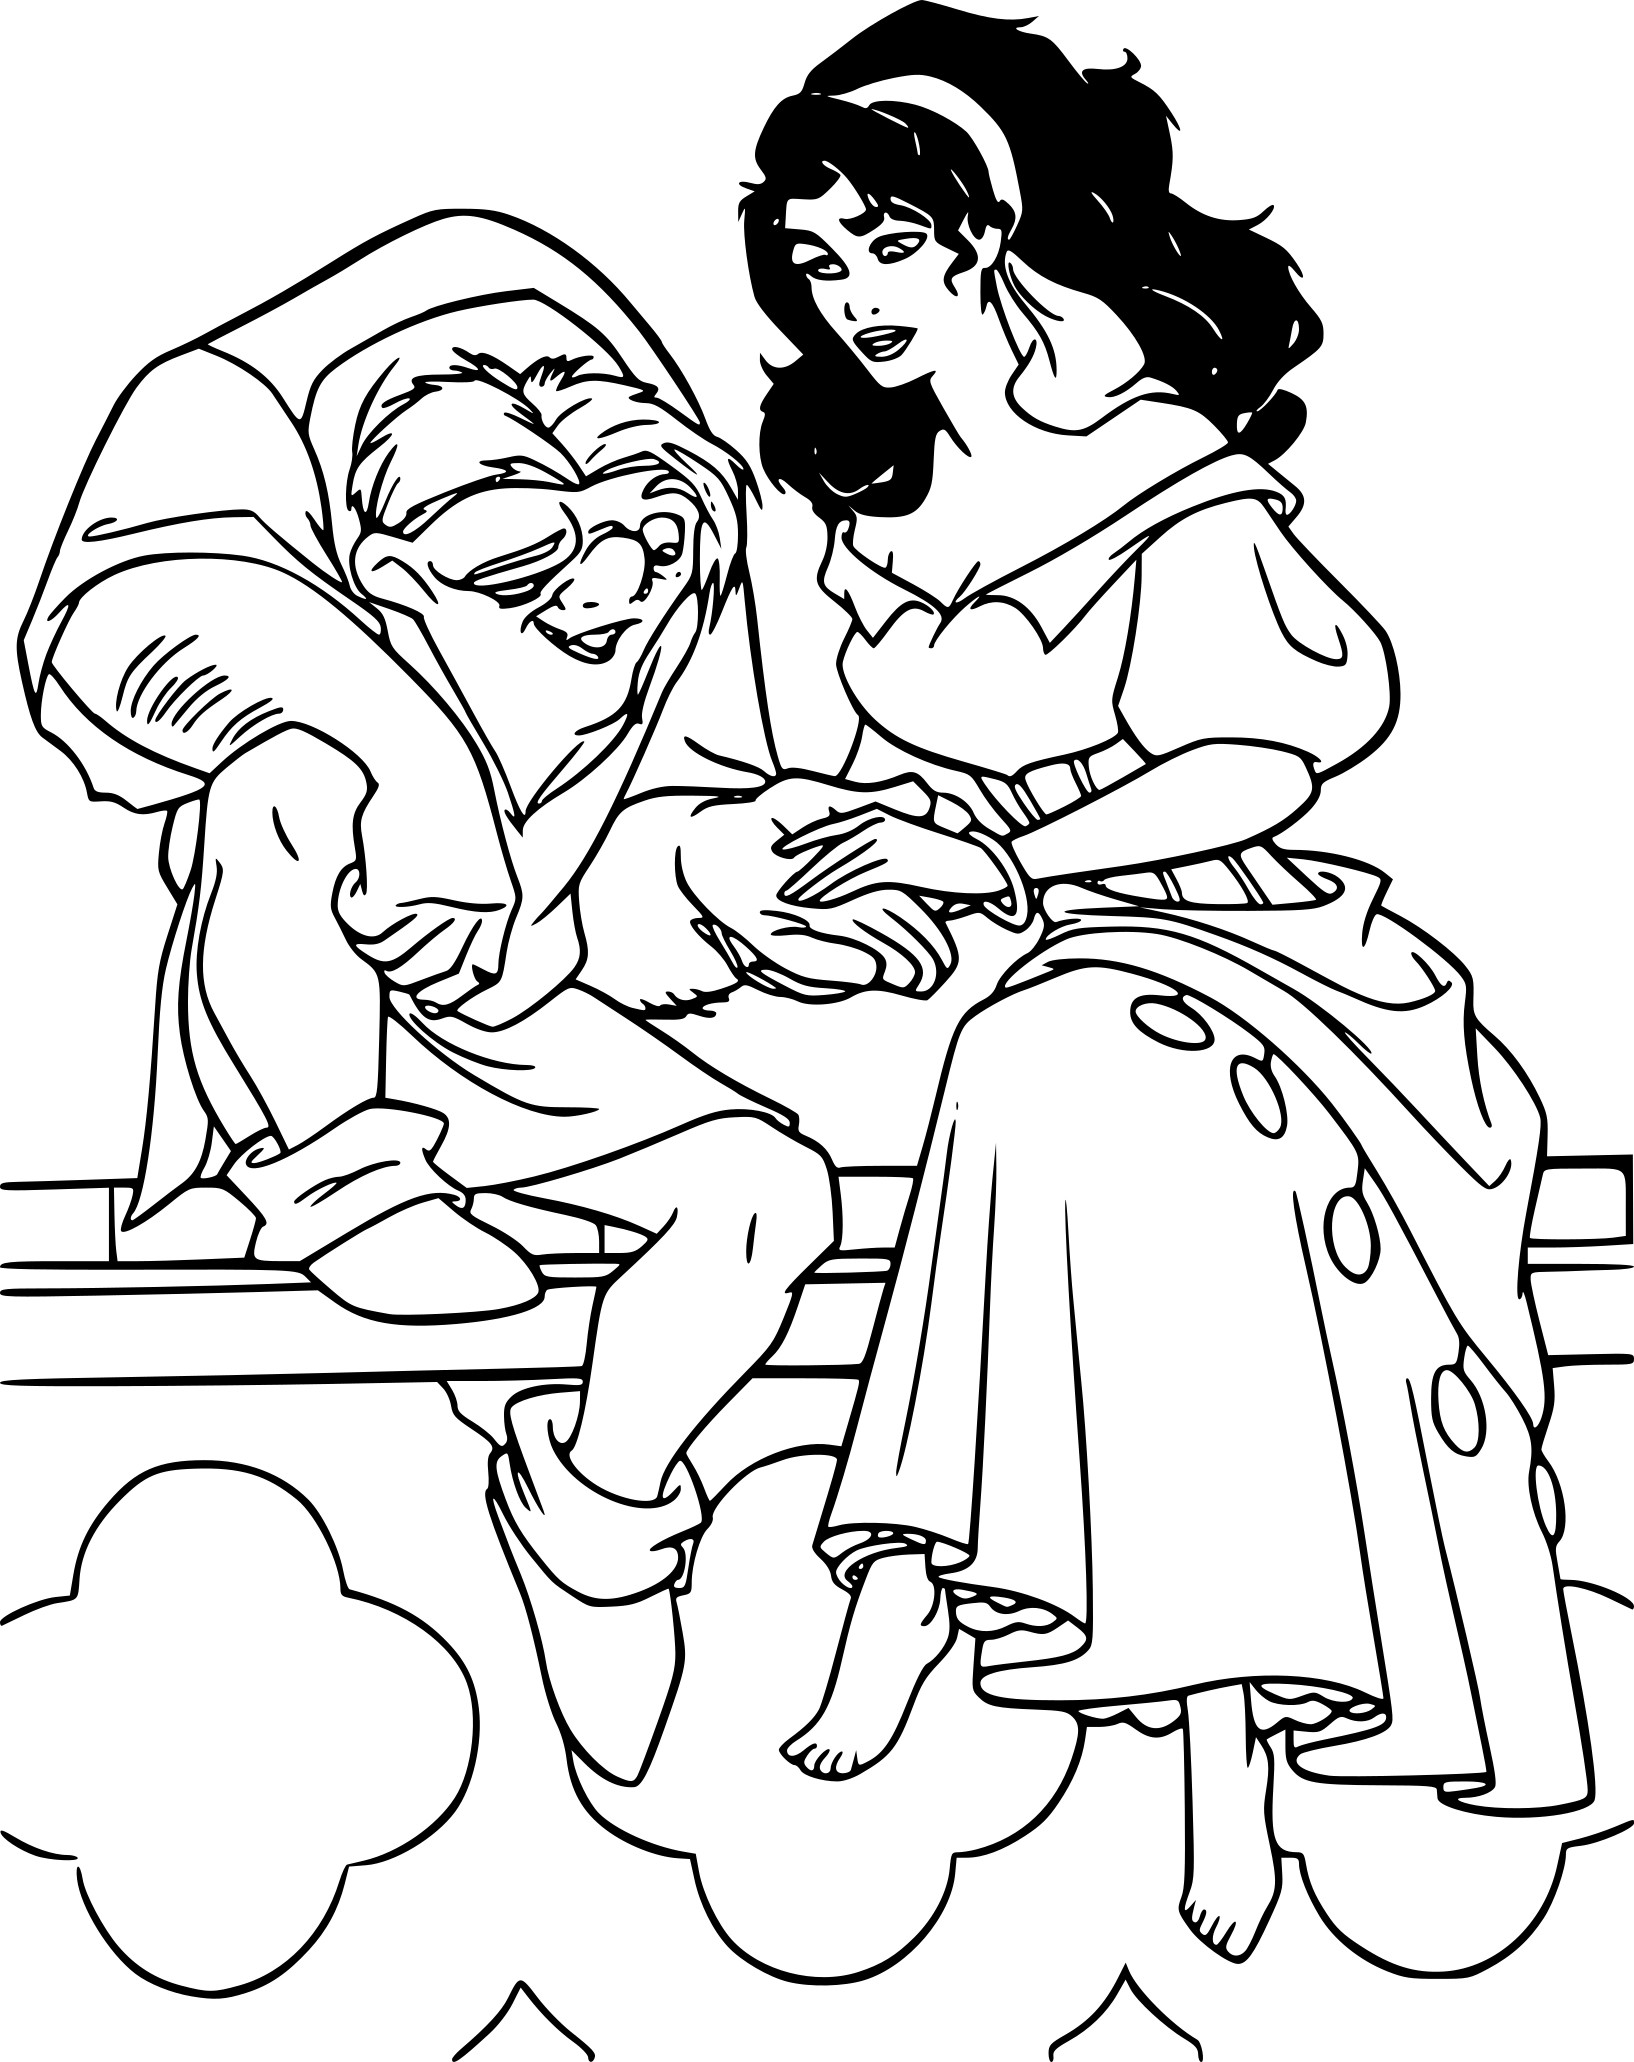 Quasimodo And Esmeralda coloring page